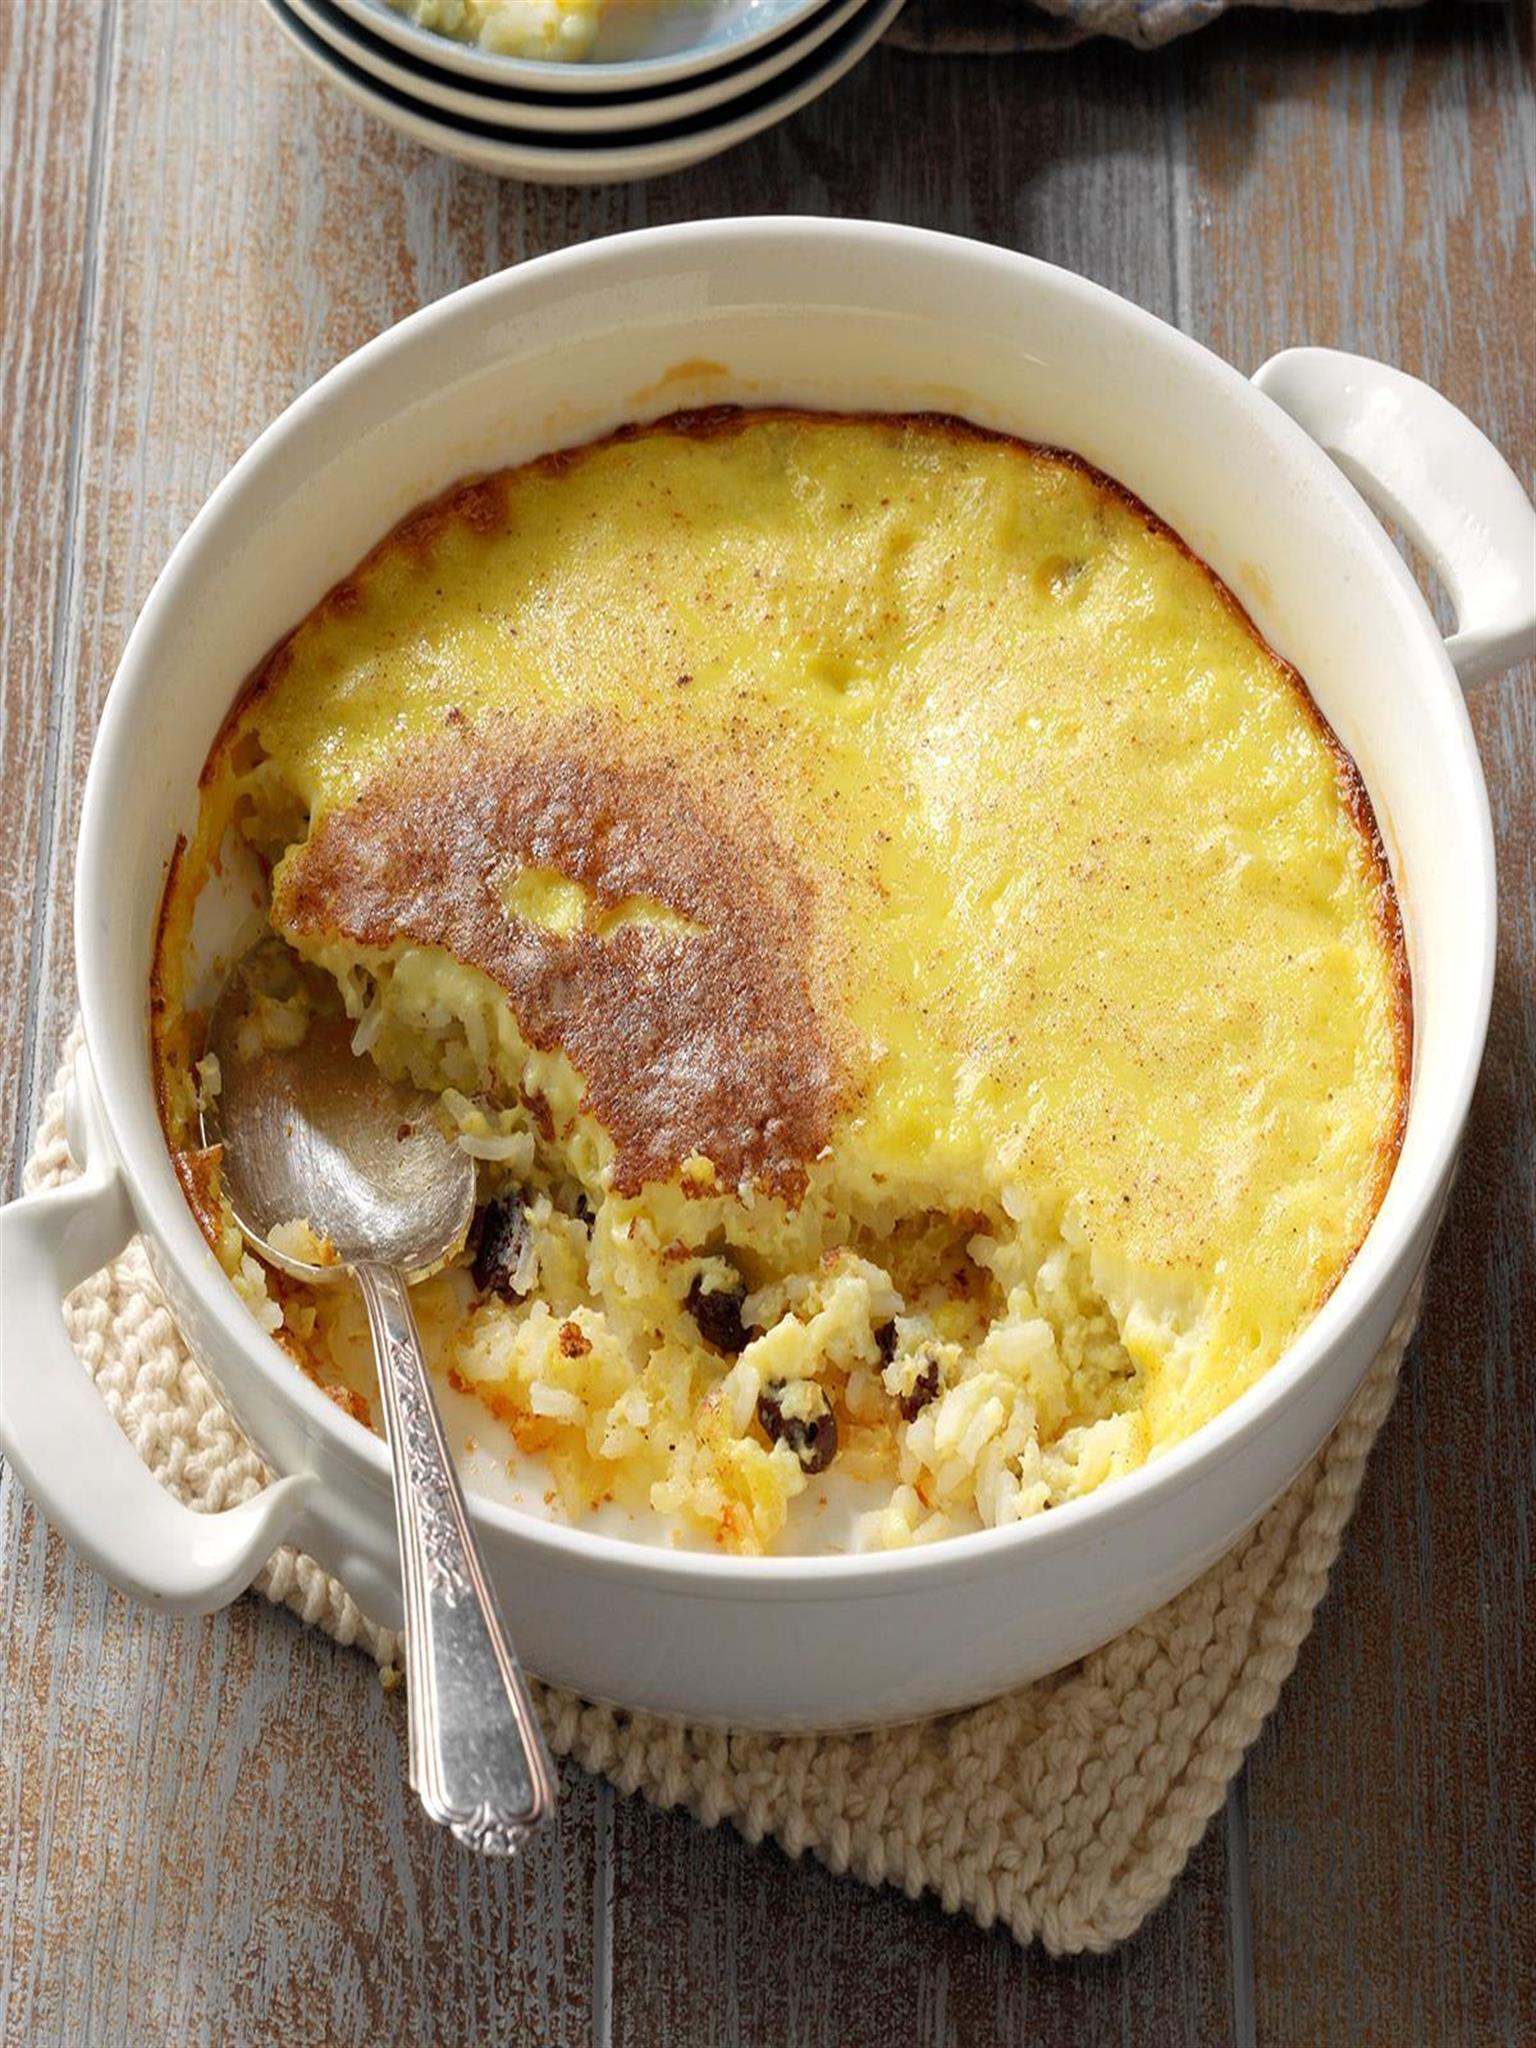 Grandma's Rice Pudding Recipe: How to Make It